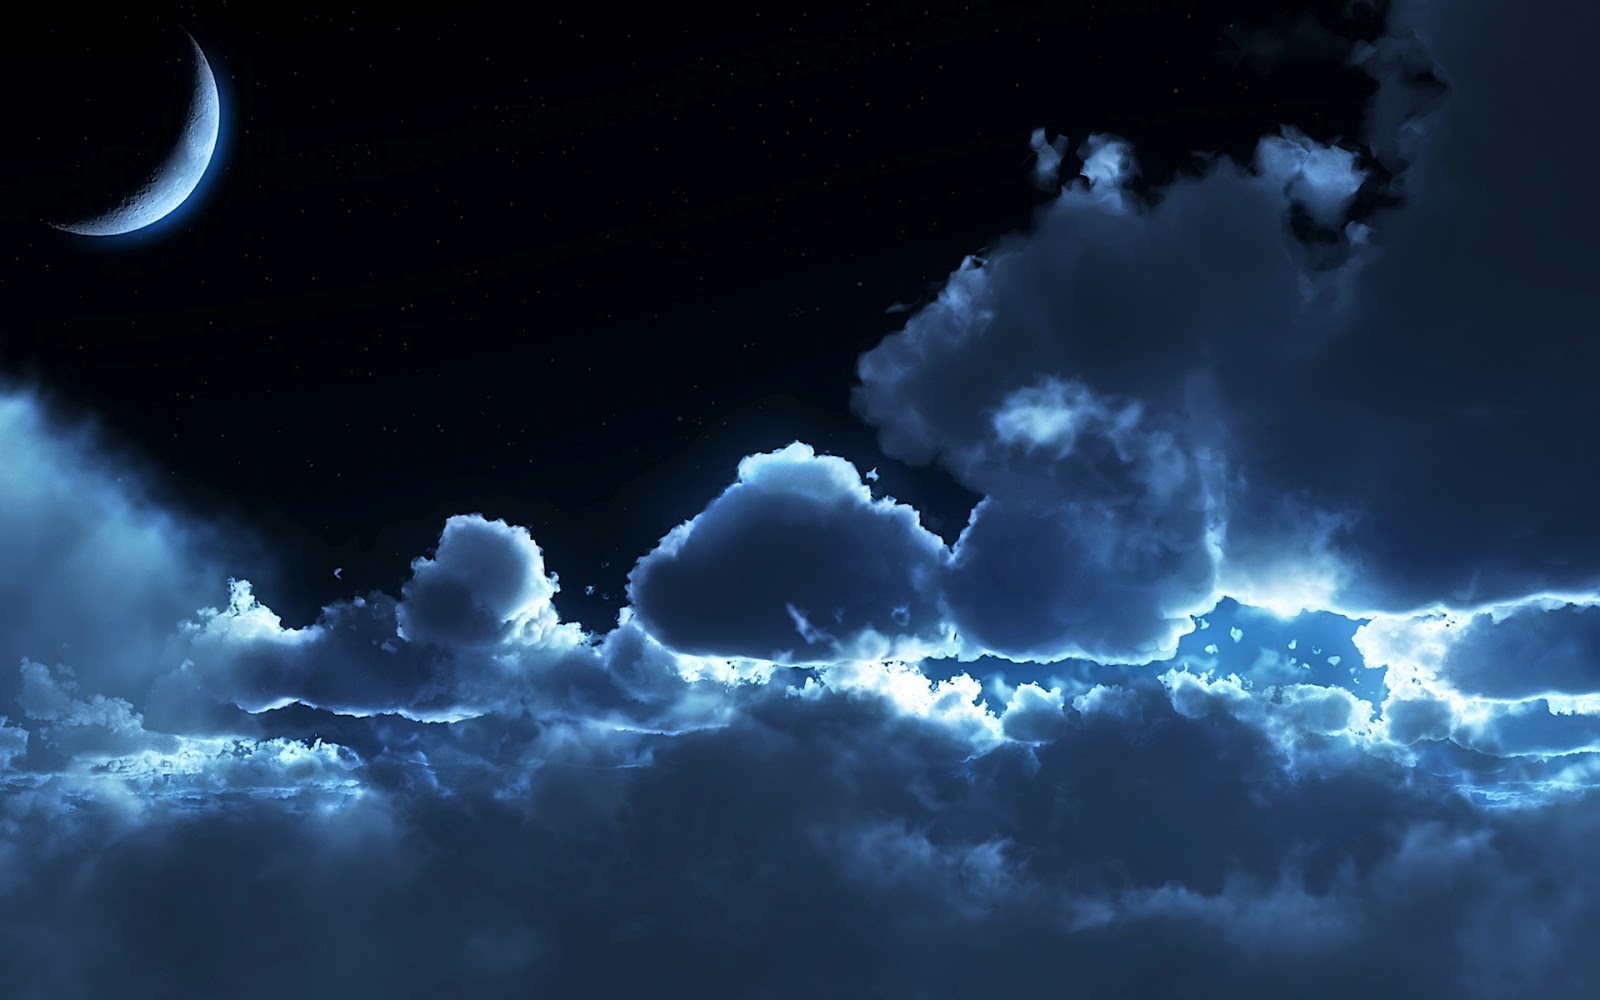 http://2.bp.blogspot.com/-xIaut4YSAA8/UGiUWlJImeI/AAAAAAAABoQ/NZdYrHet_wo/s1600/wallpaper-cloud-moon.jpg